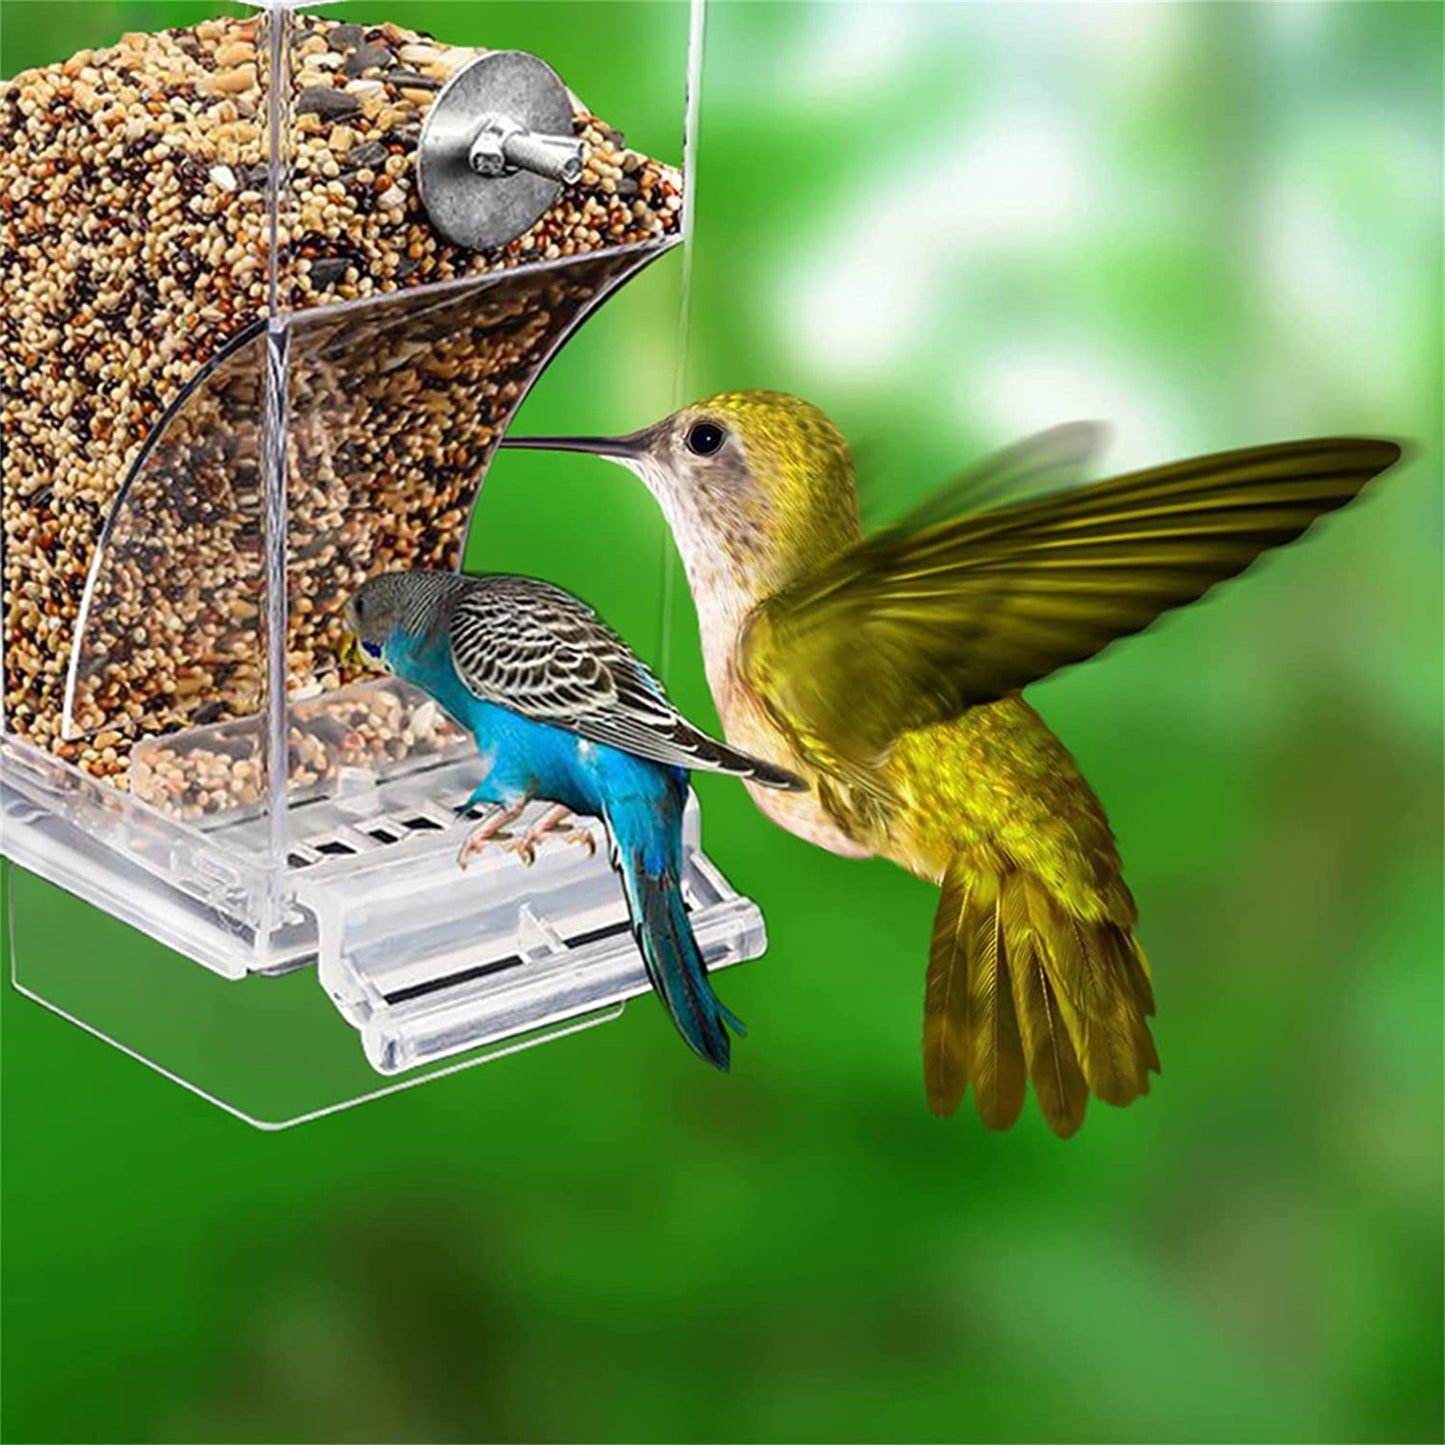 Comederos automáticos para pájaros, accesorios para periquitos.